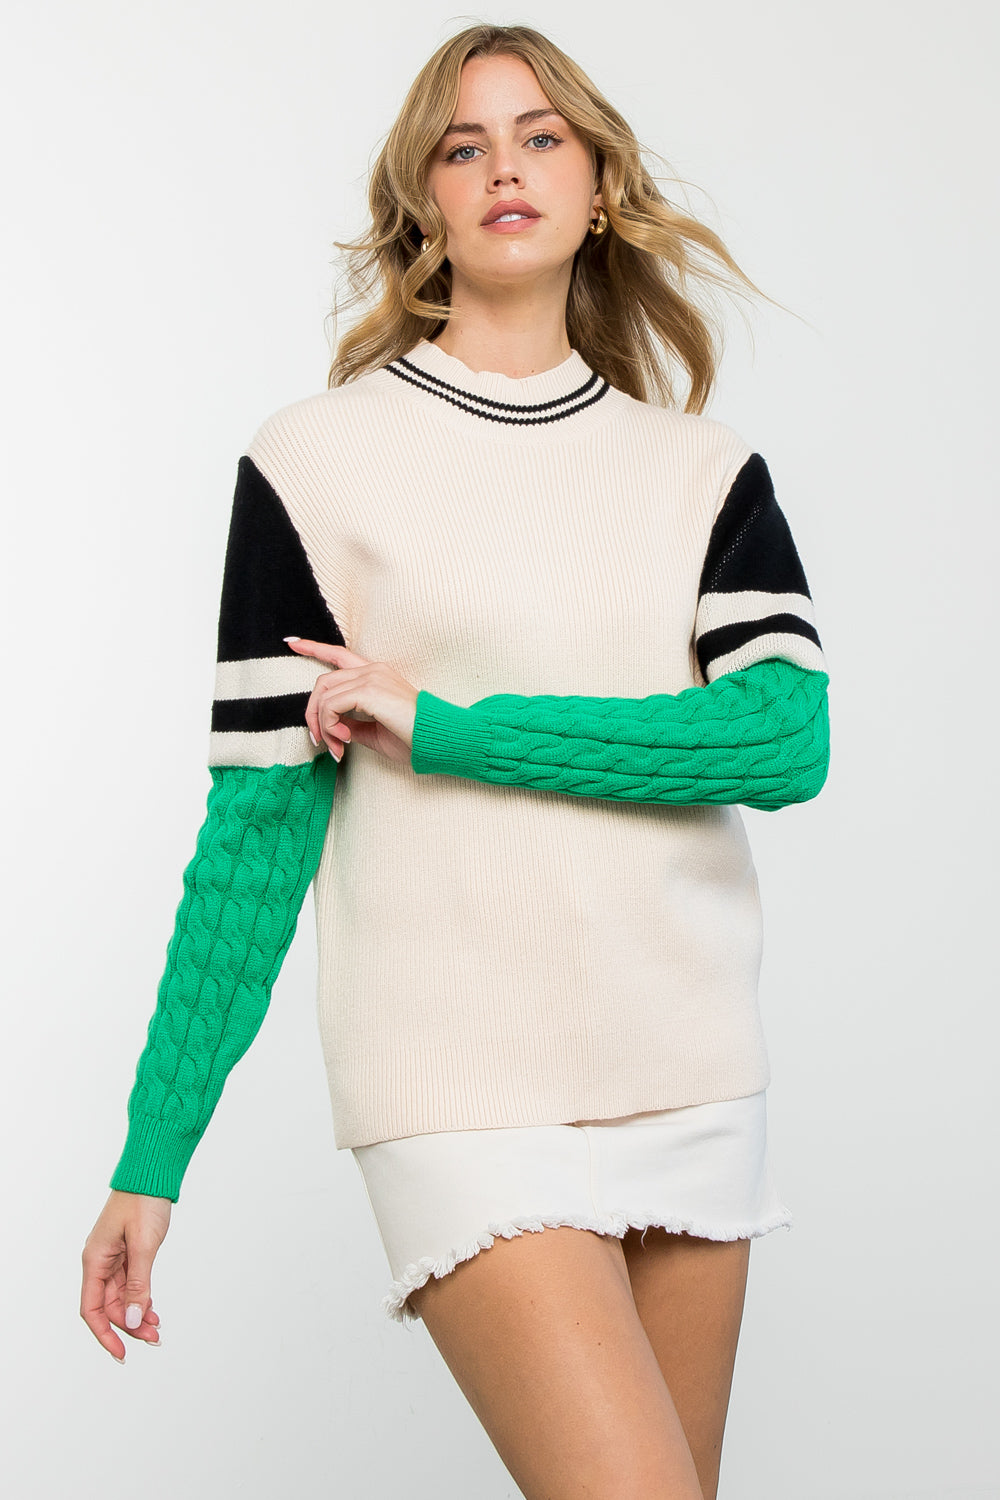 Maeve Sweater